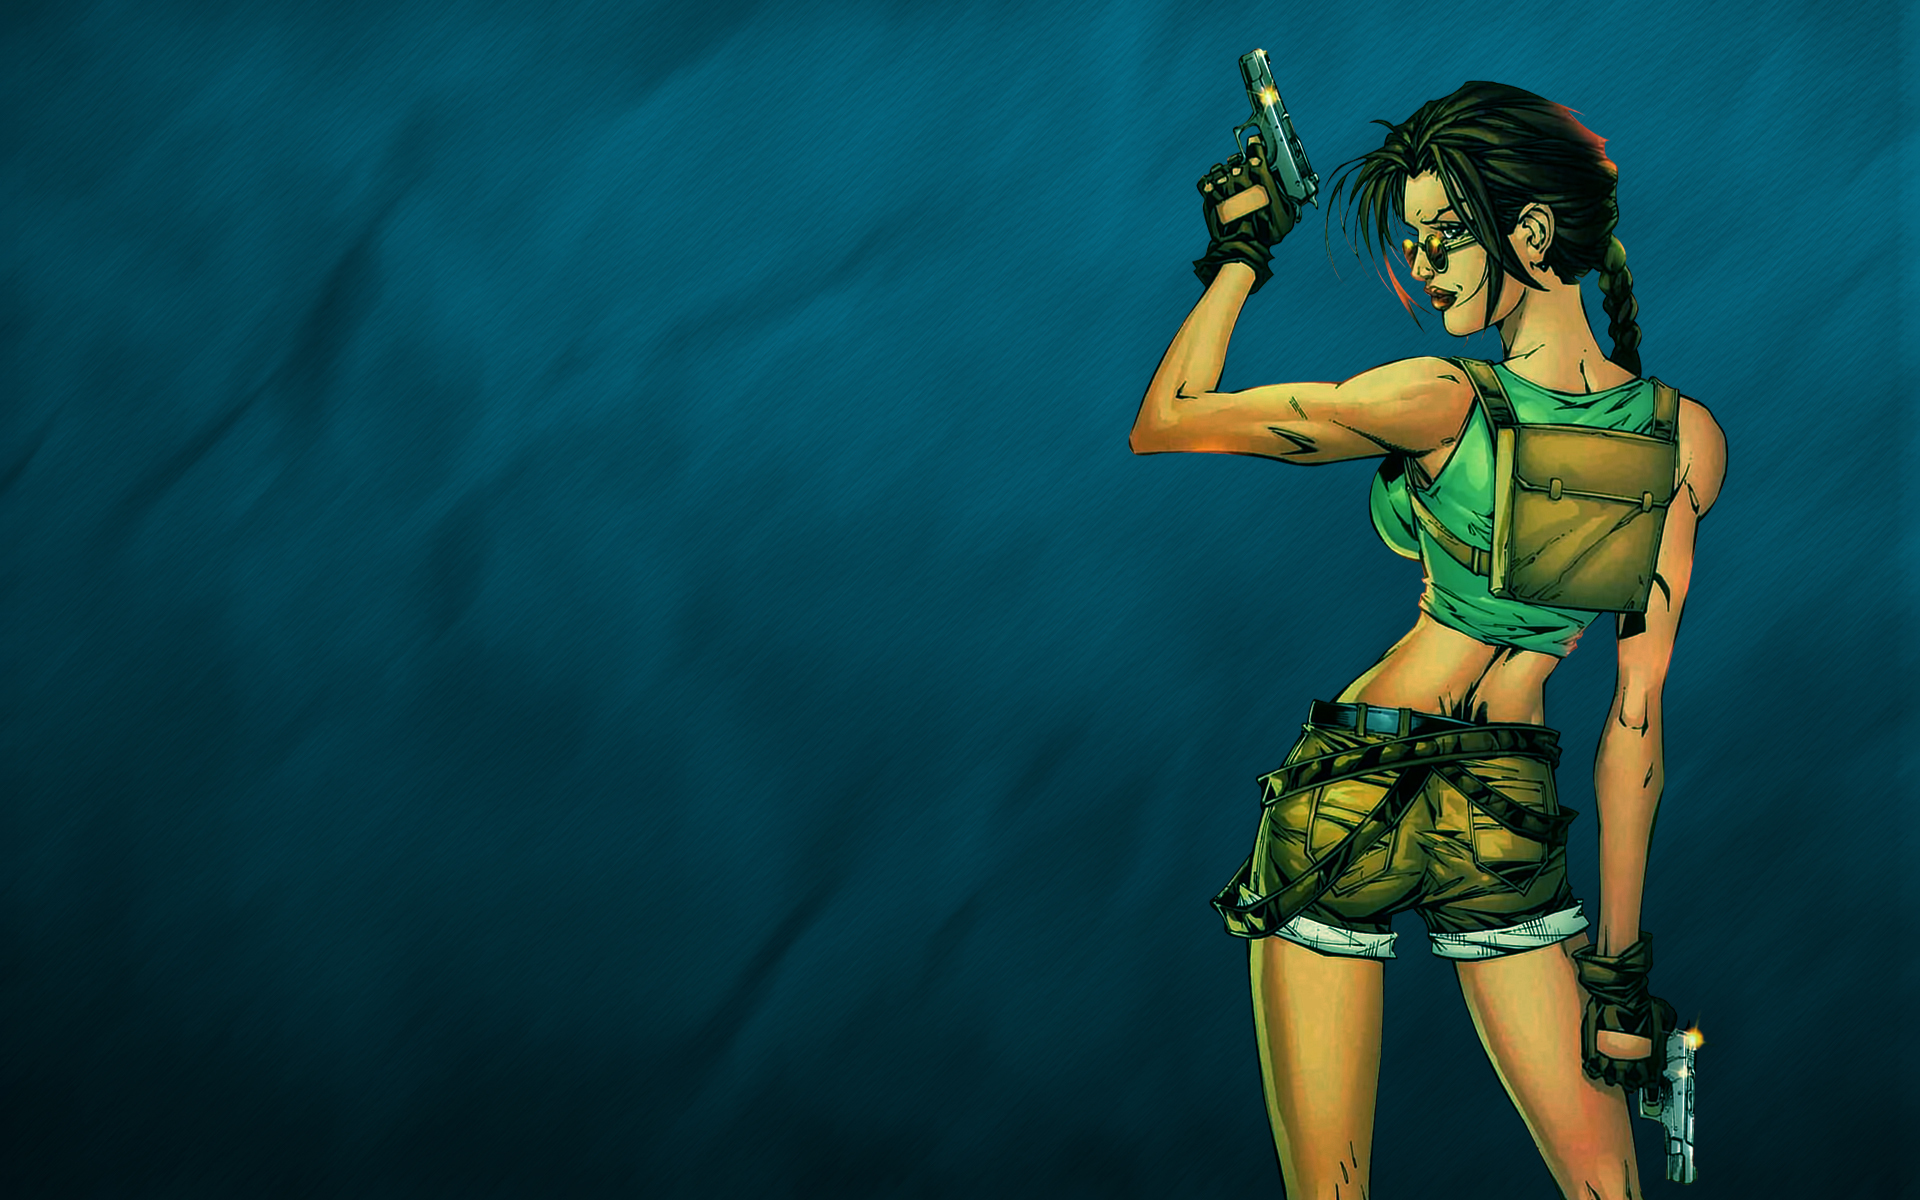 Desktop Wallpapers Tomb Raider Lara Croft female Games 1920x1200 Girls young woman vdeo game